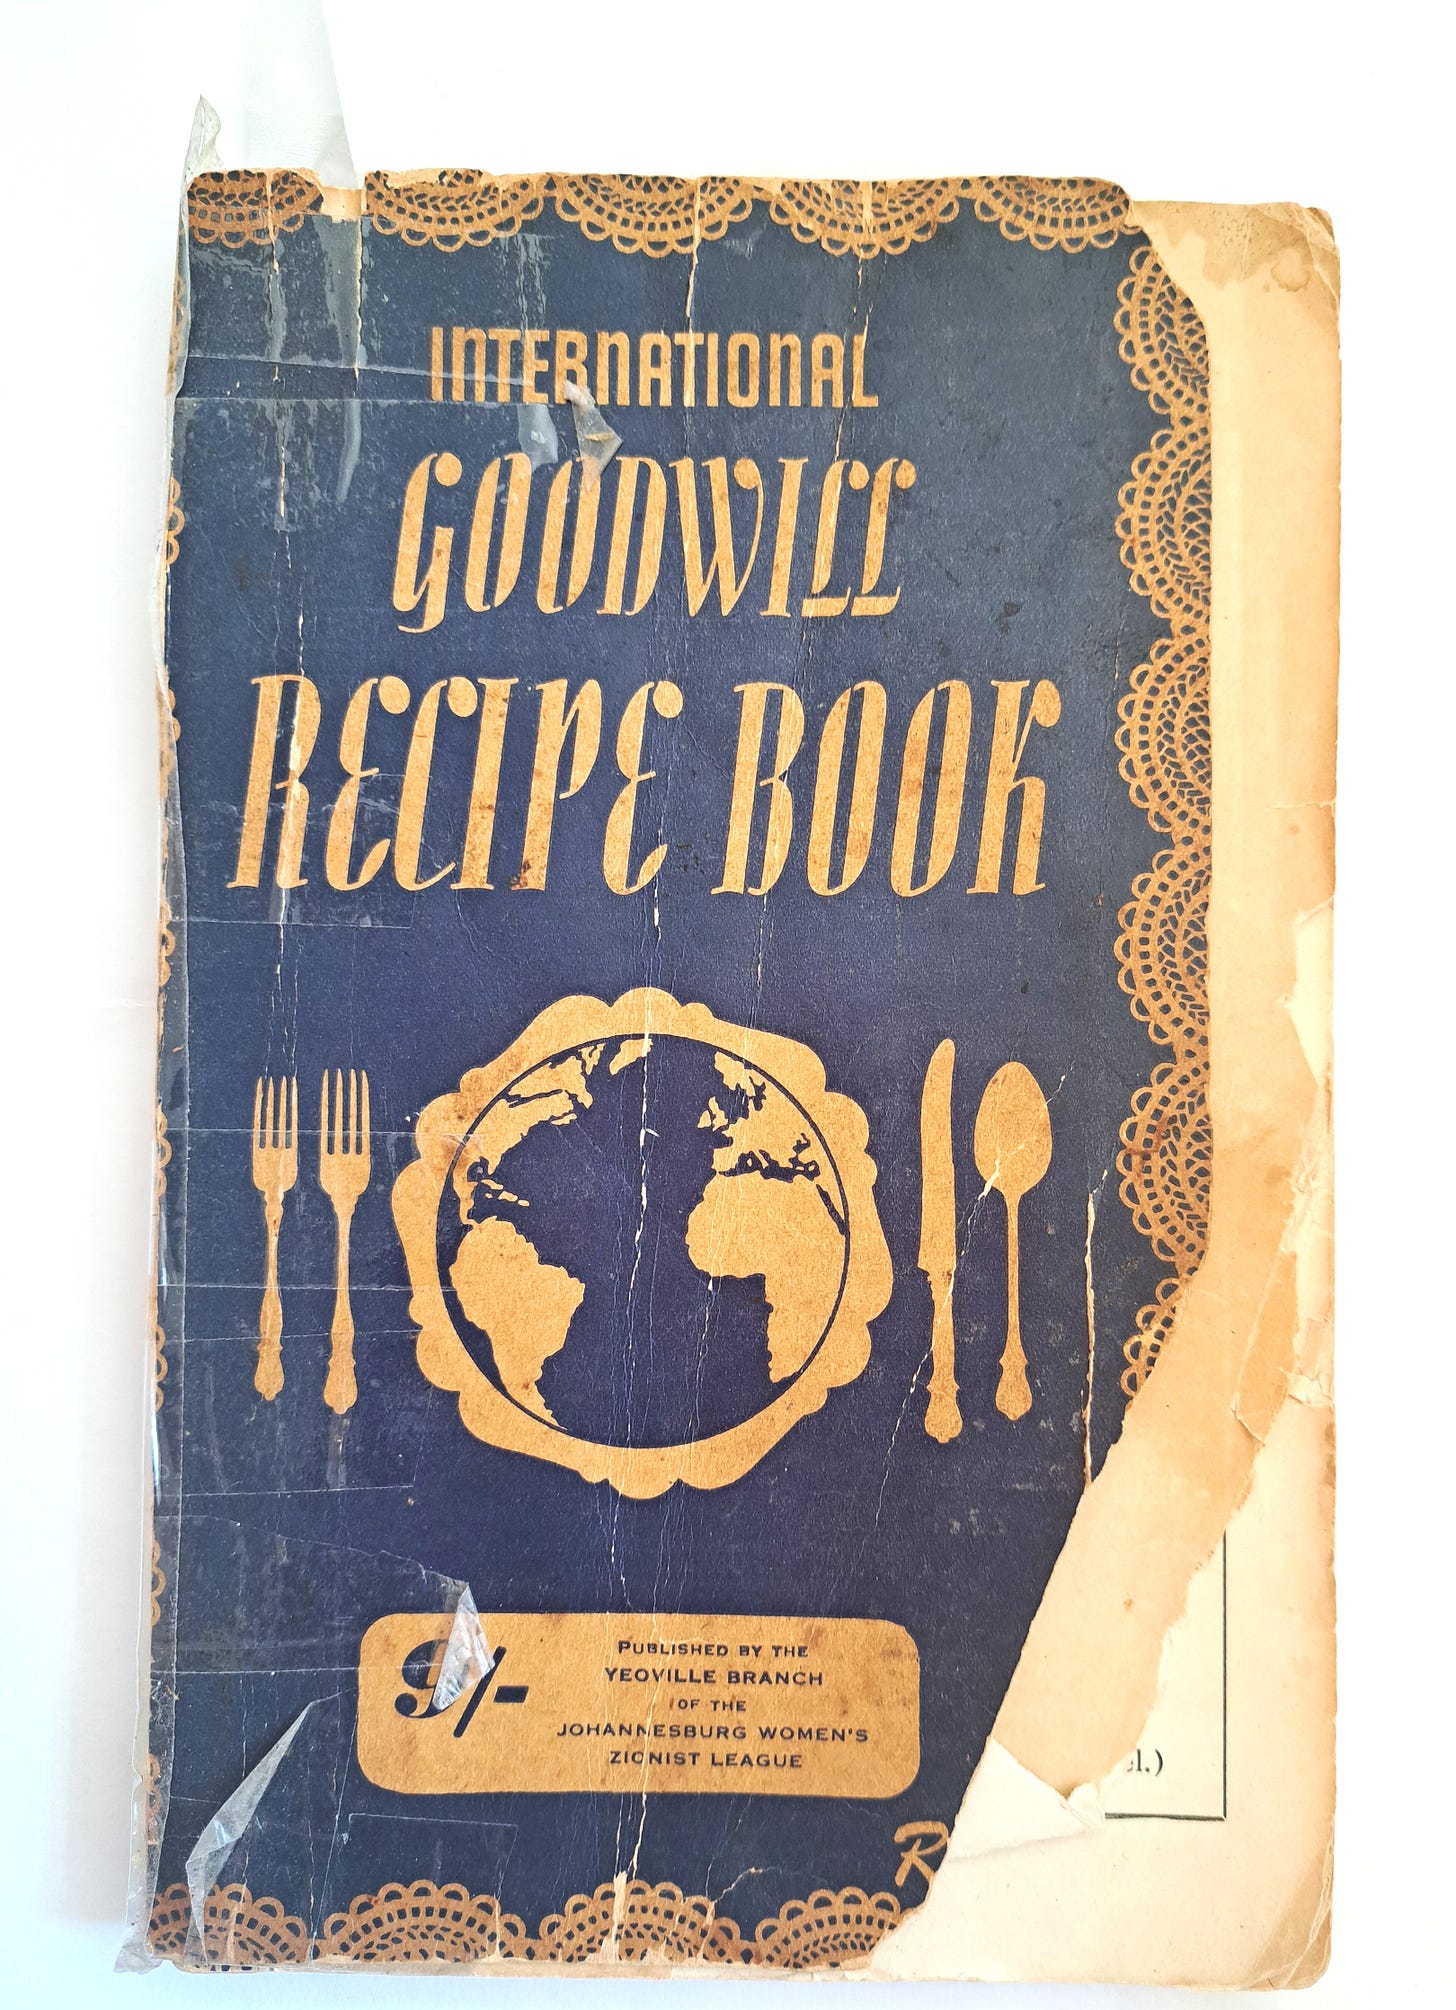 The International Goodwill Recipe Book